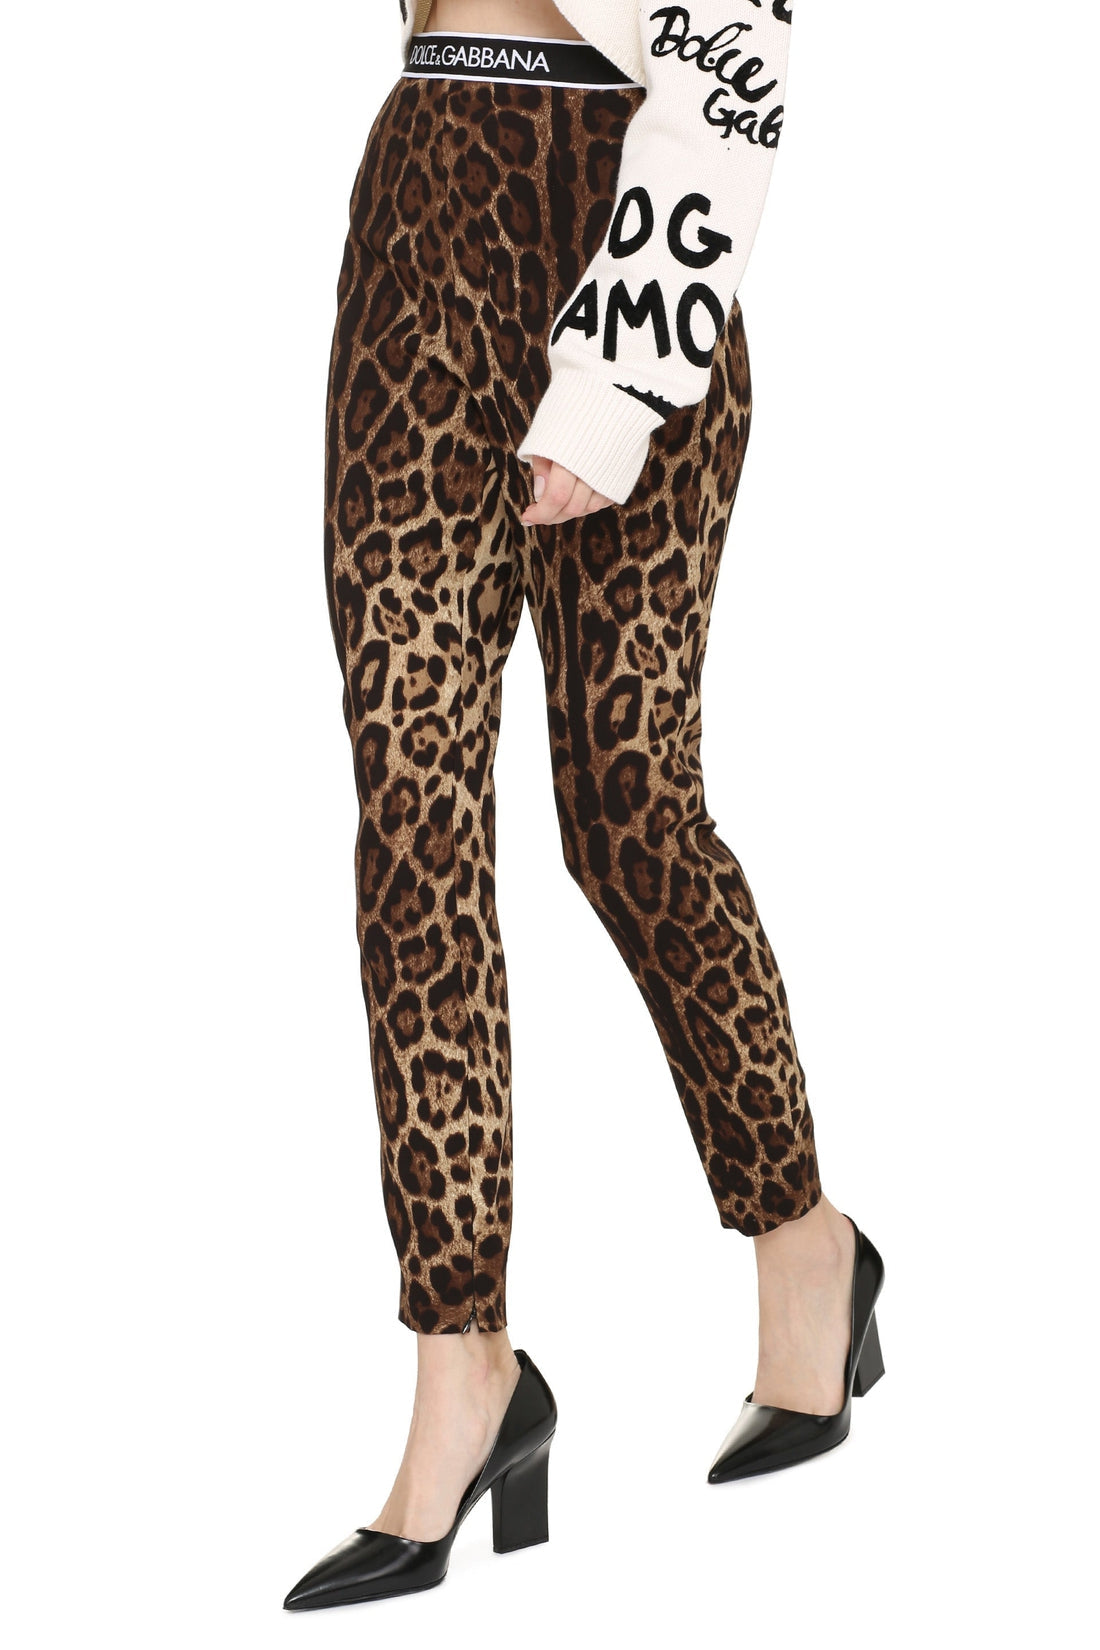 Dolce & Gabbana-OUTLET-SALE-Elasticated waist leggings-ARCHIVIST